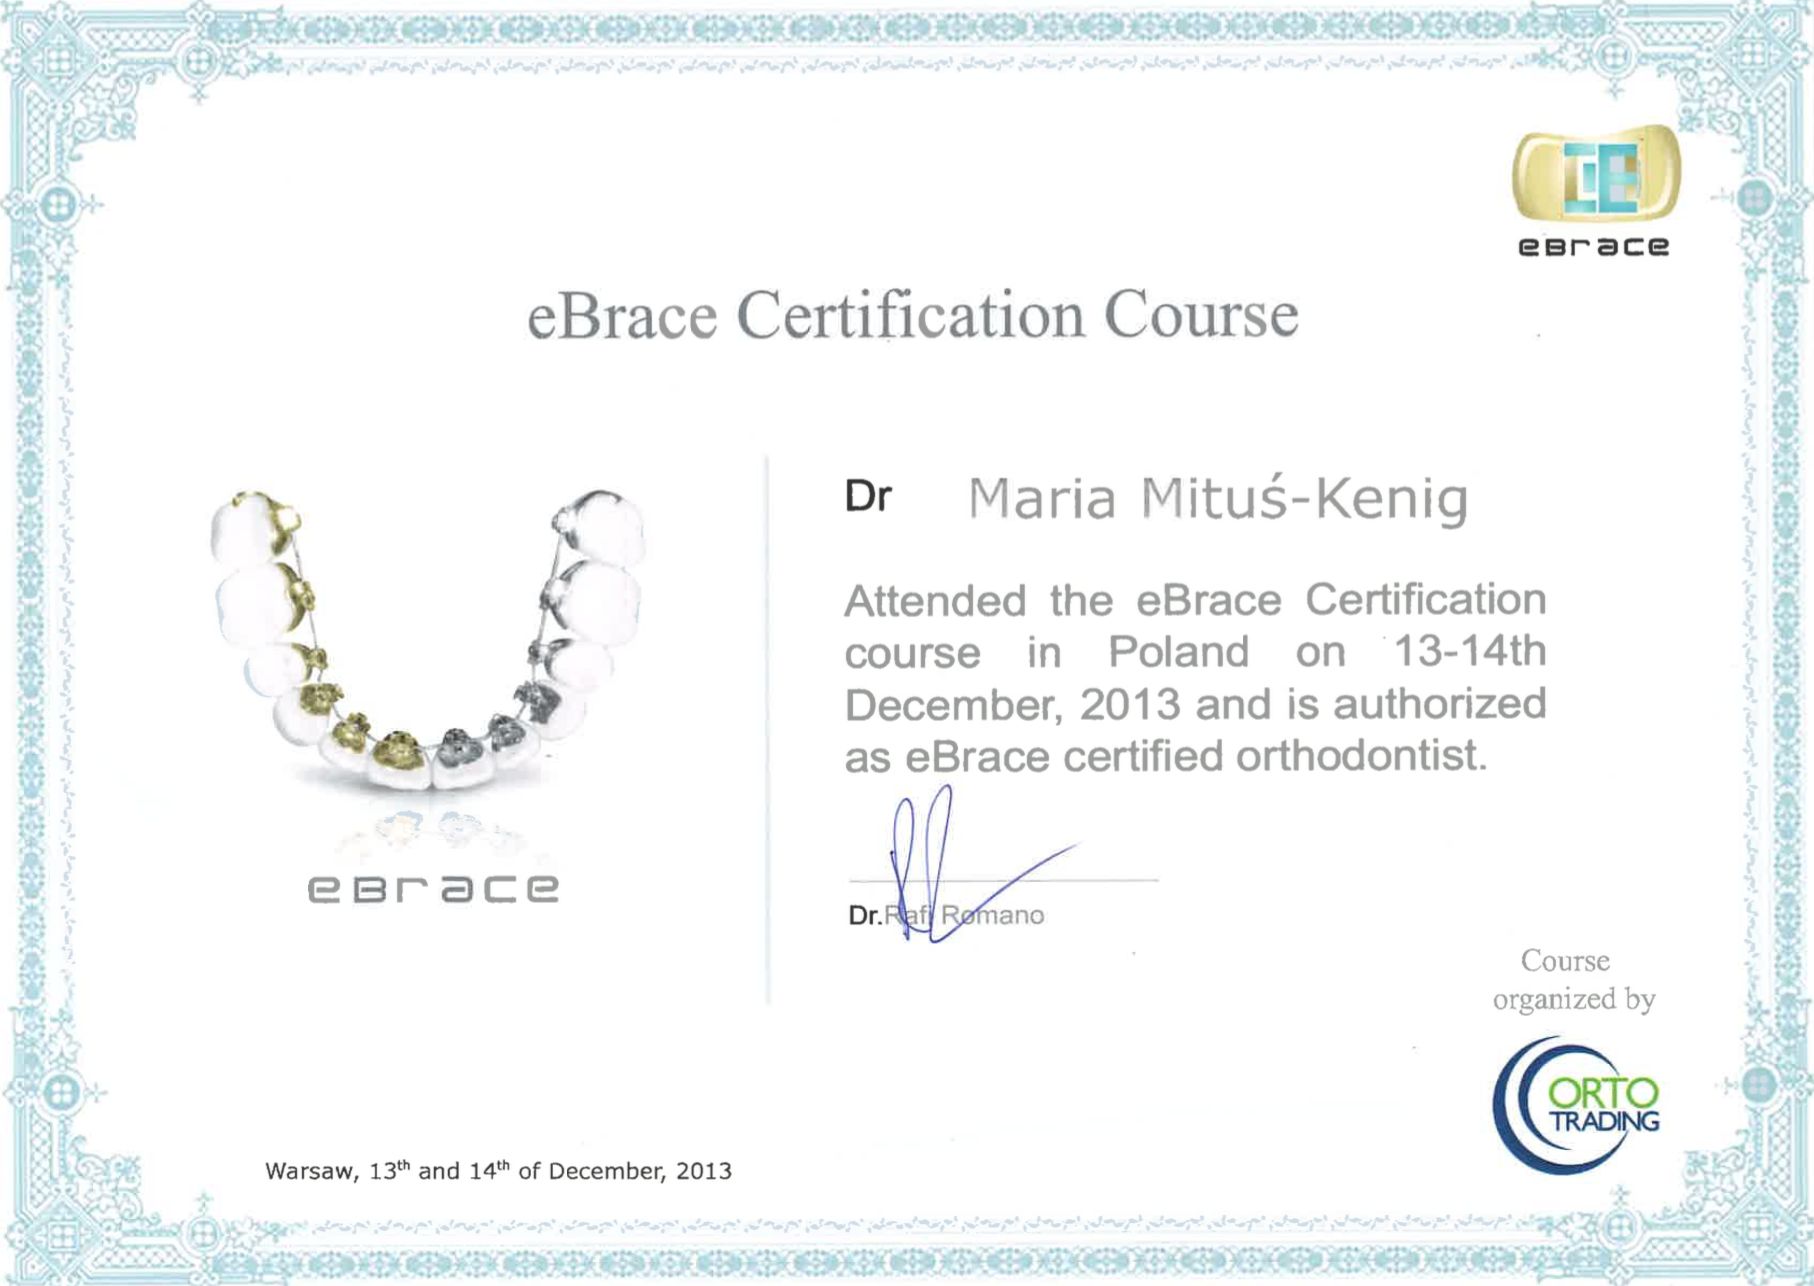 Certificate of attendance at eBrace course